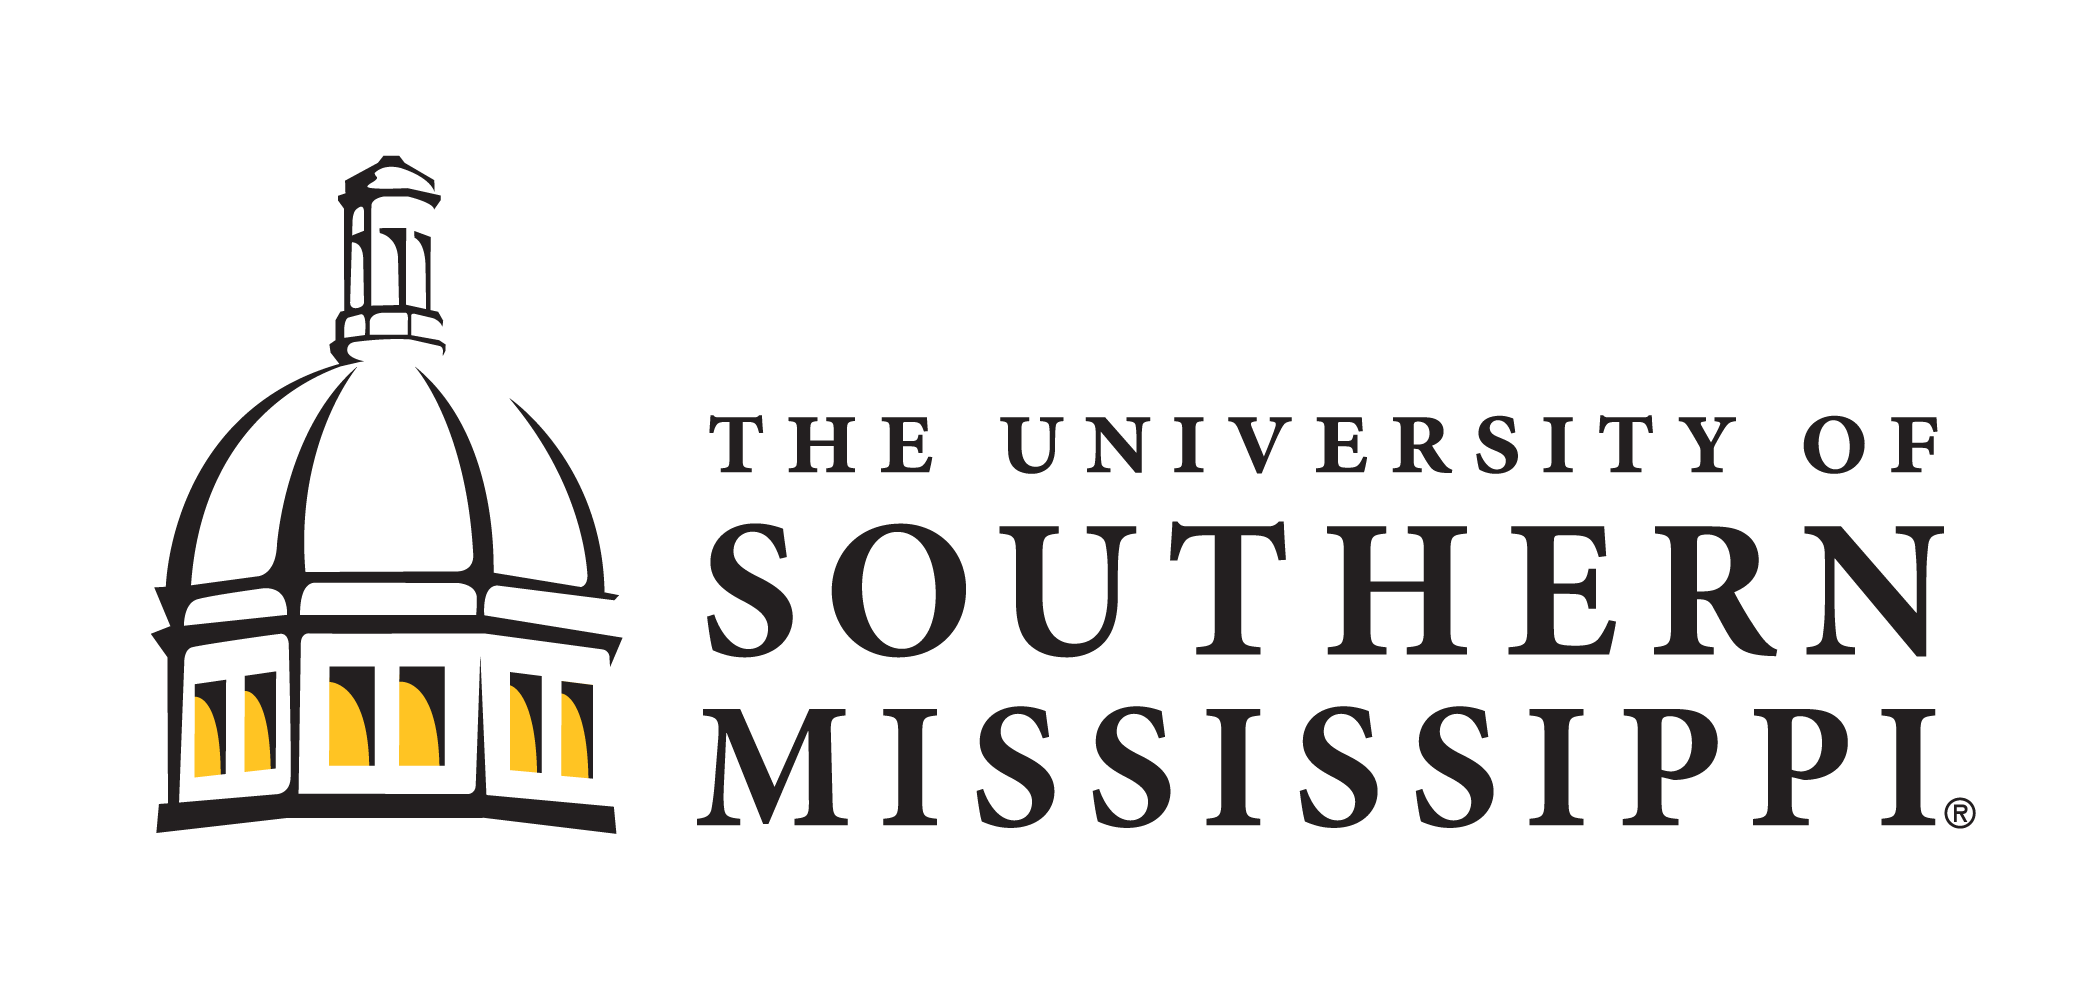 southern miss basketball logo